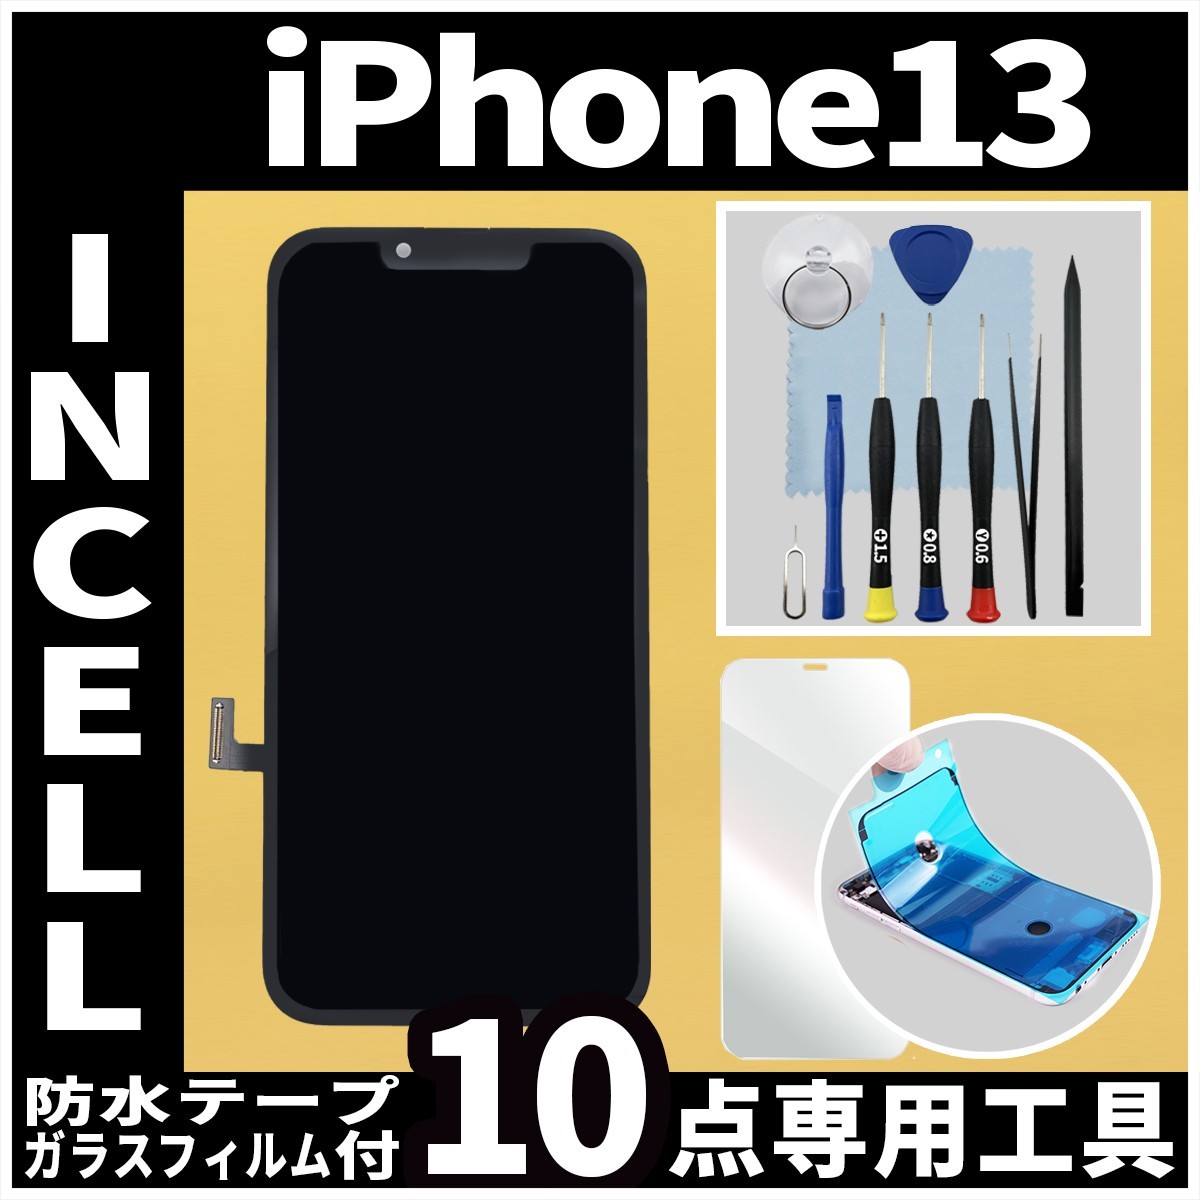 iPhone13 フロントパネル Incell コピーパネル 高品質 防水テープ 修理工具 互換 画面割れ 液晶 修理 iphone ガラス割れ ディスプレイ